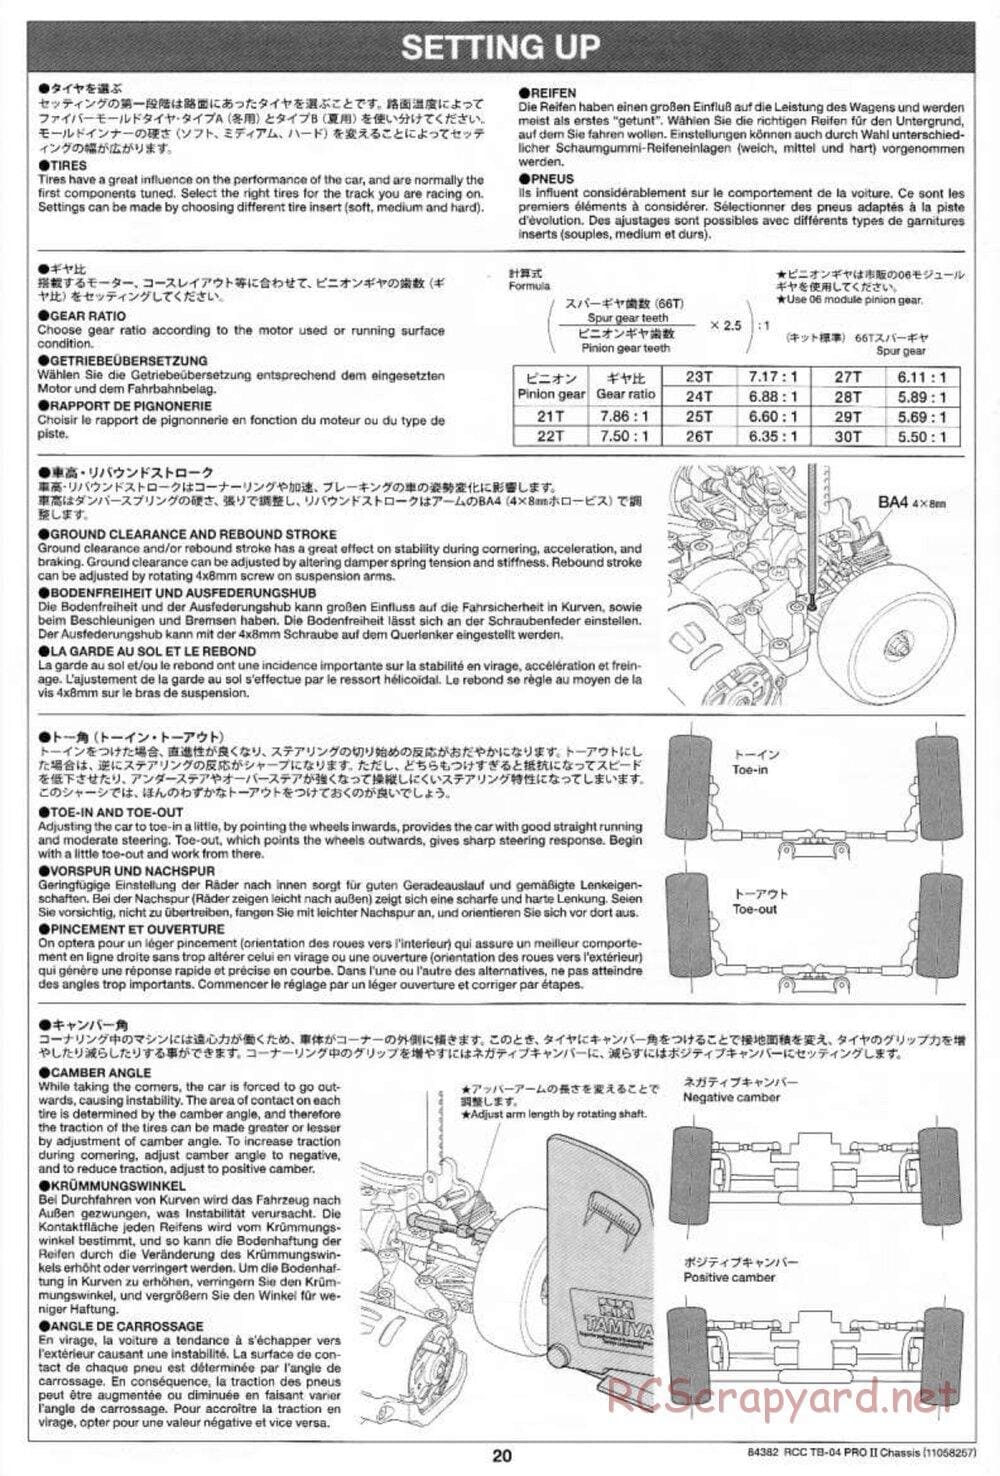 Tamiya - TB-04 Pro II Chassis - Manual - Page 20